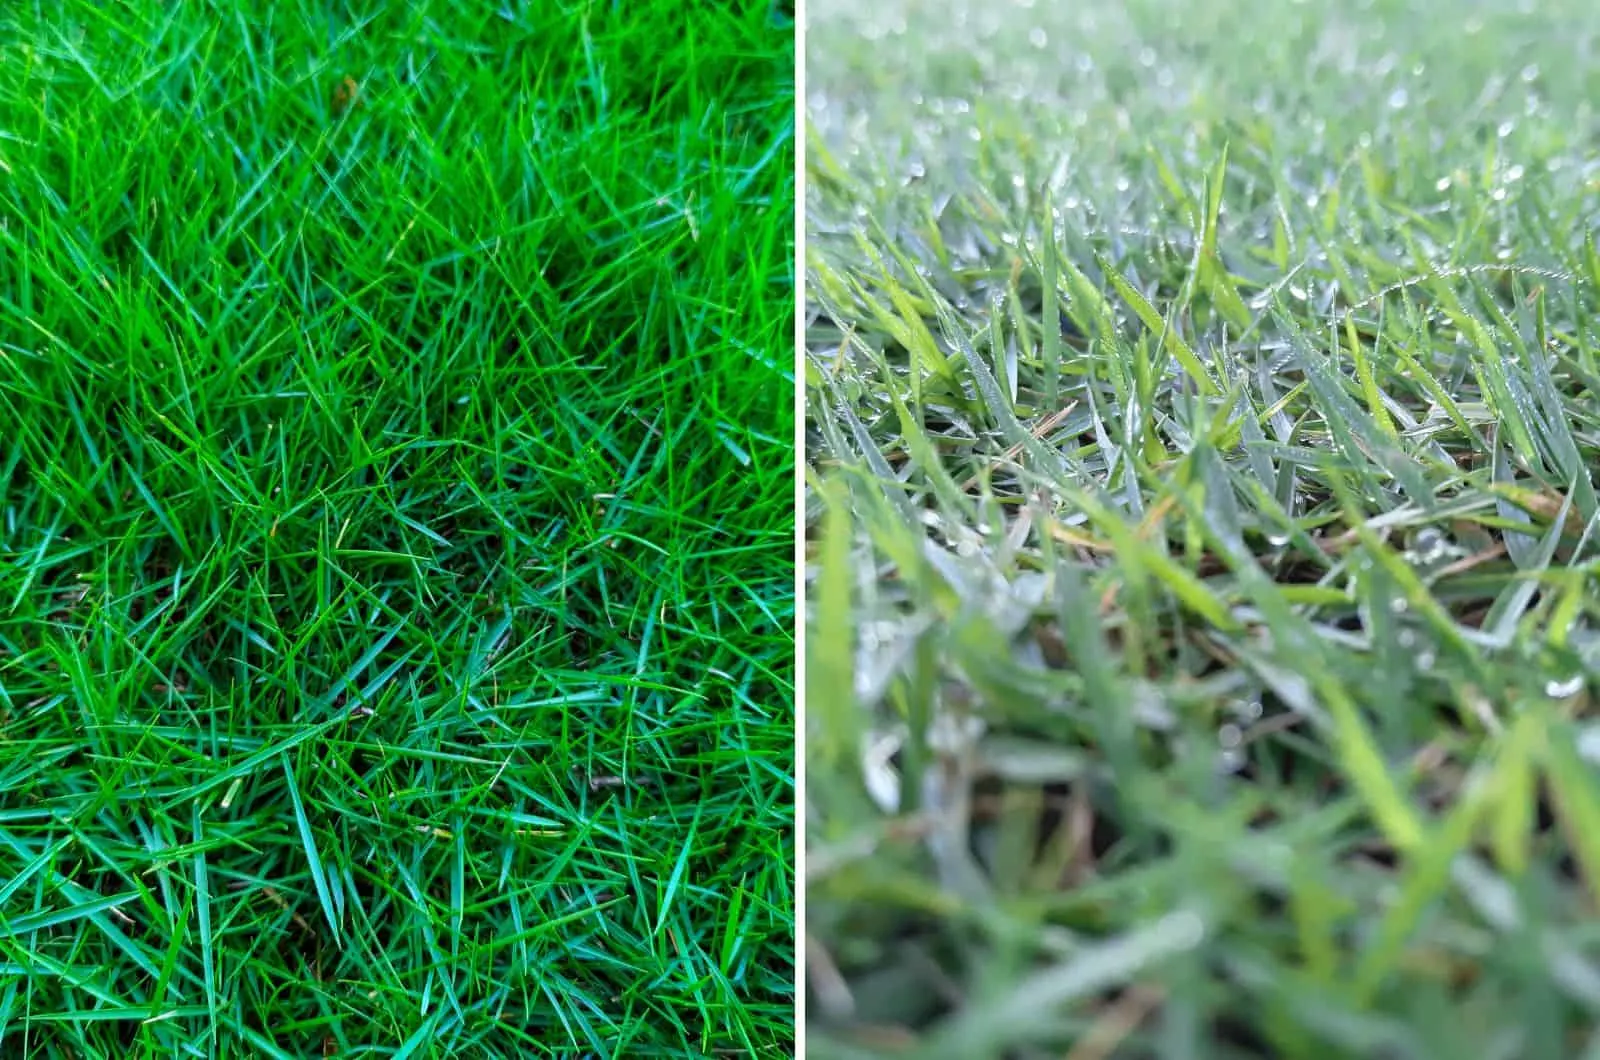 Zoysia and Bermuda grass photos